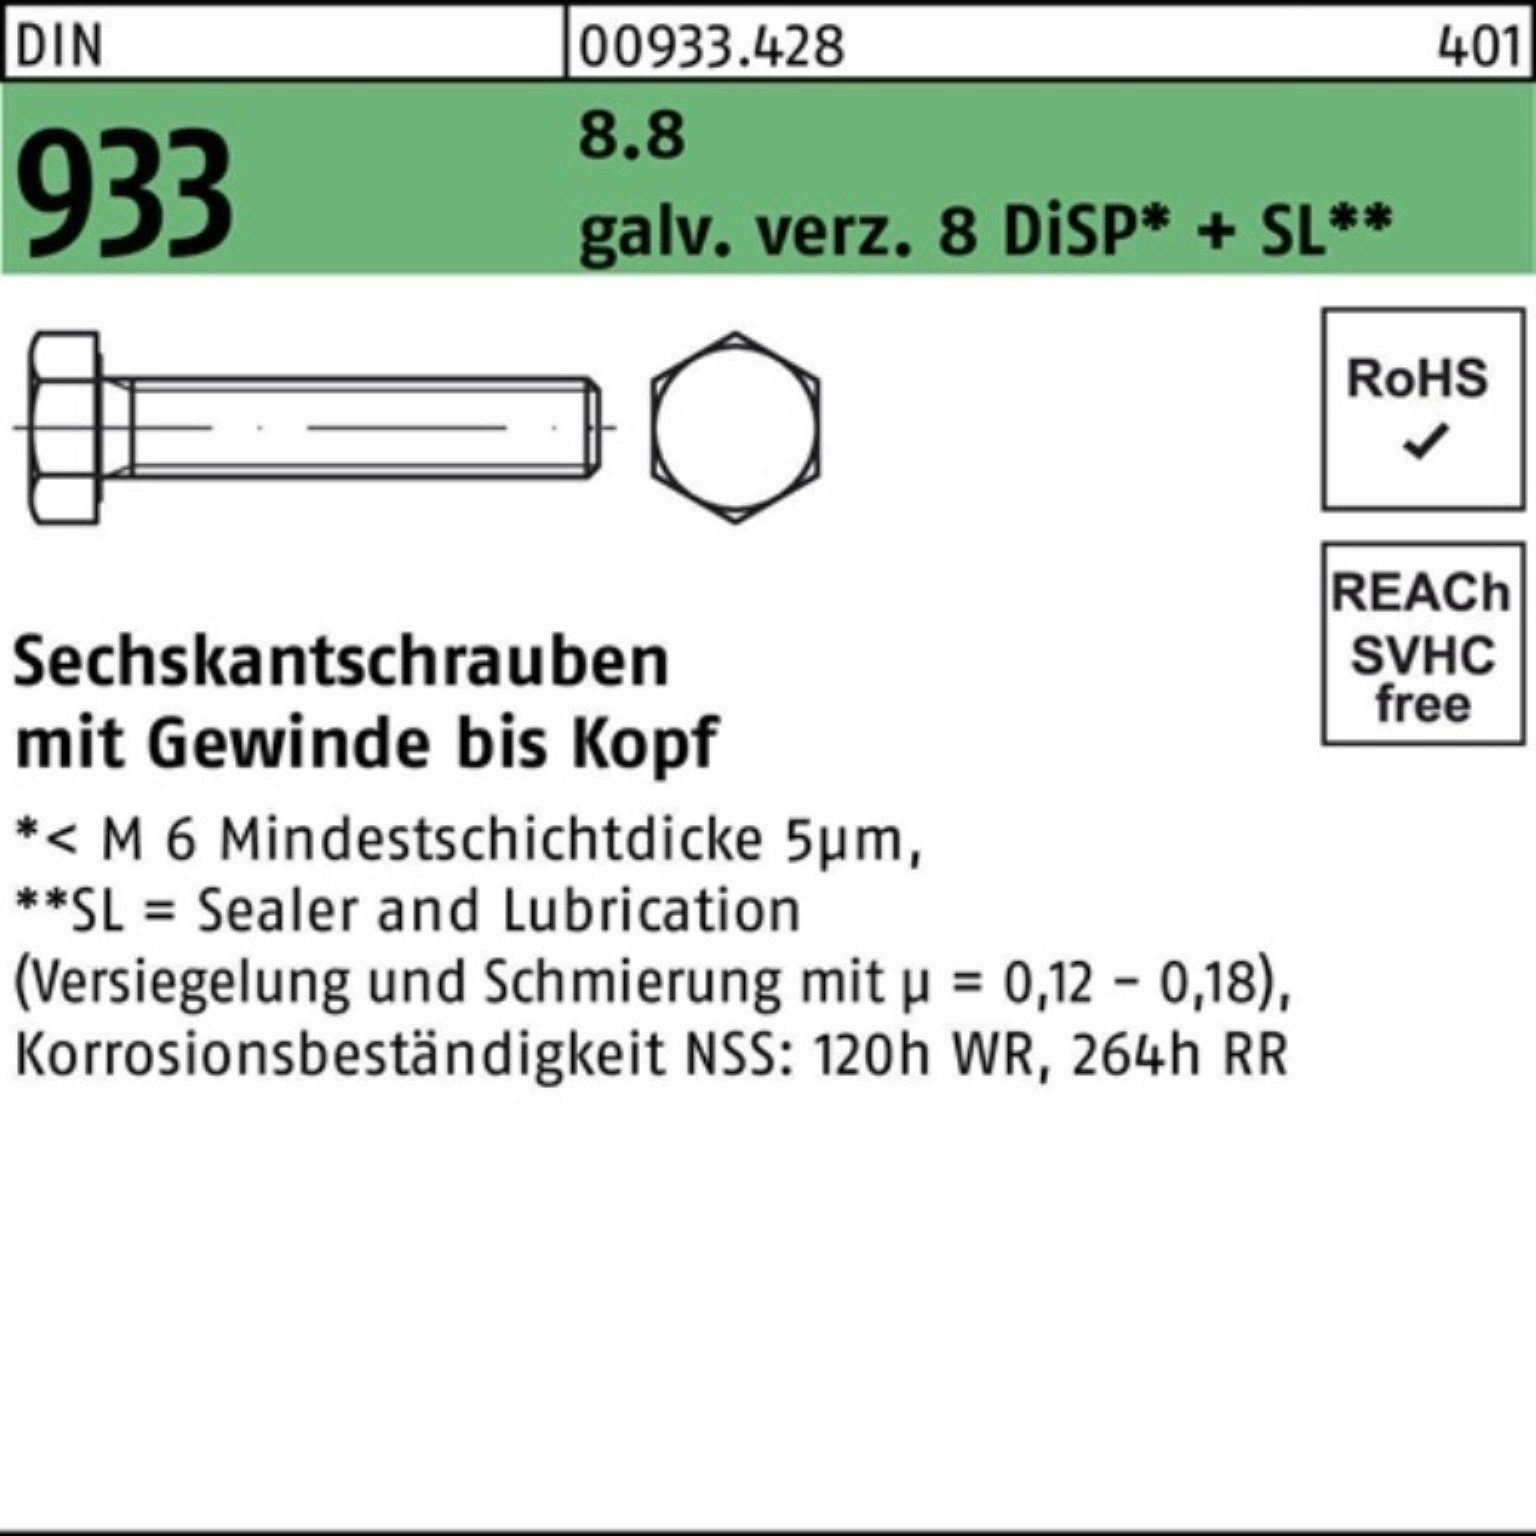 Reyher Sechskantschraube 100er 8.8 SL 933 25 DIN DiSP 8 Zn gal M16x Sechskantschraube + Pack VG